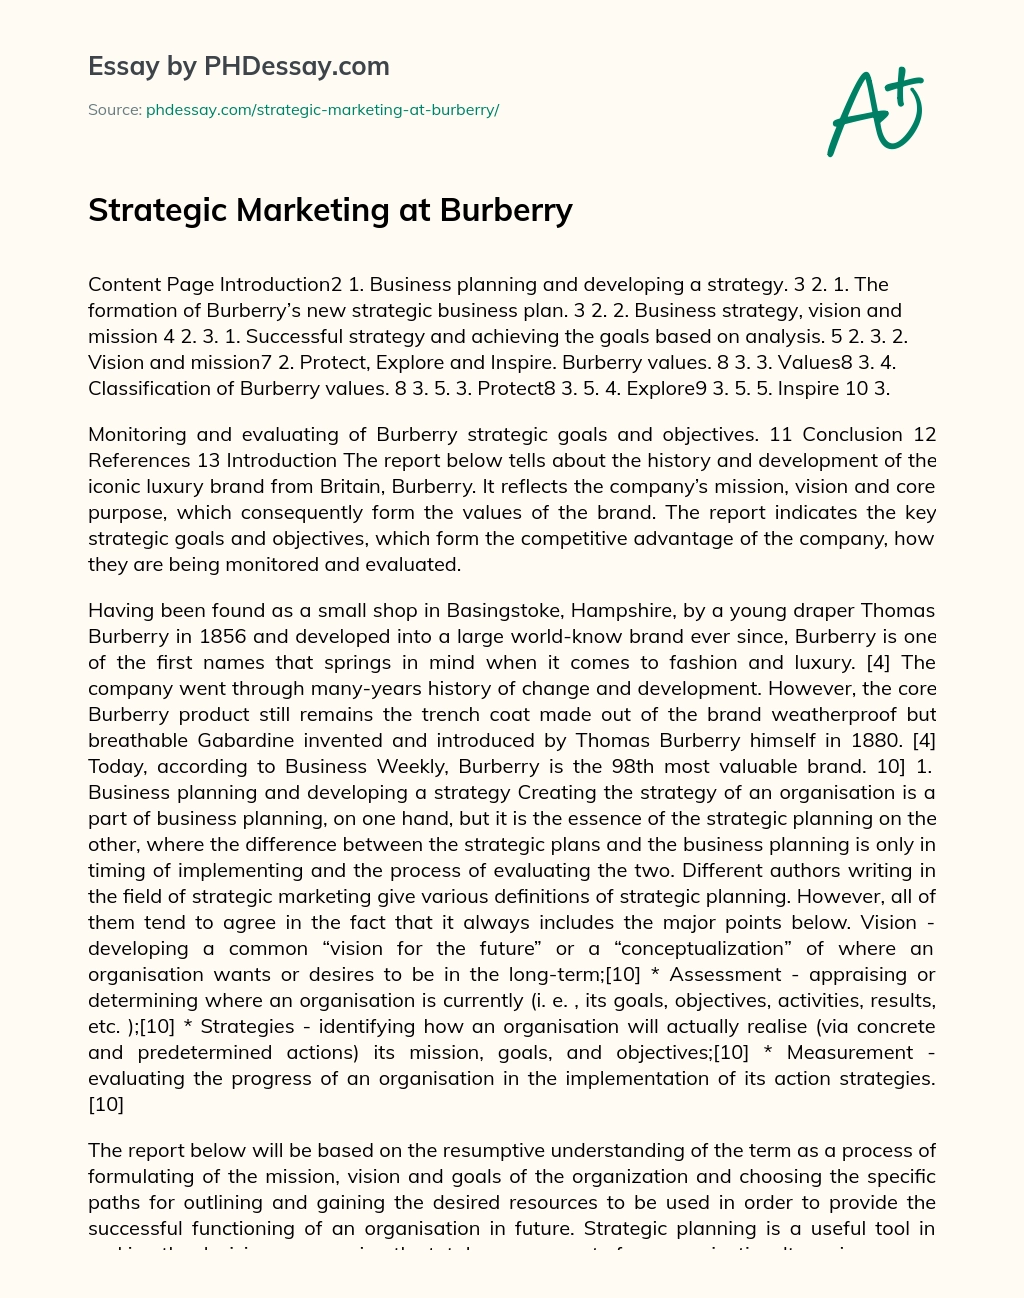 Strategic Marketing at Burberry essay